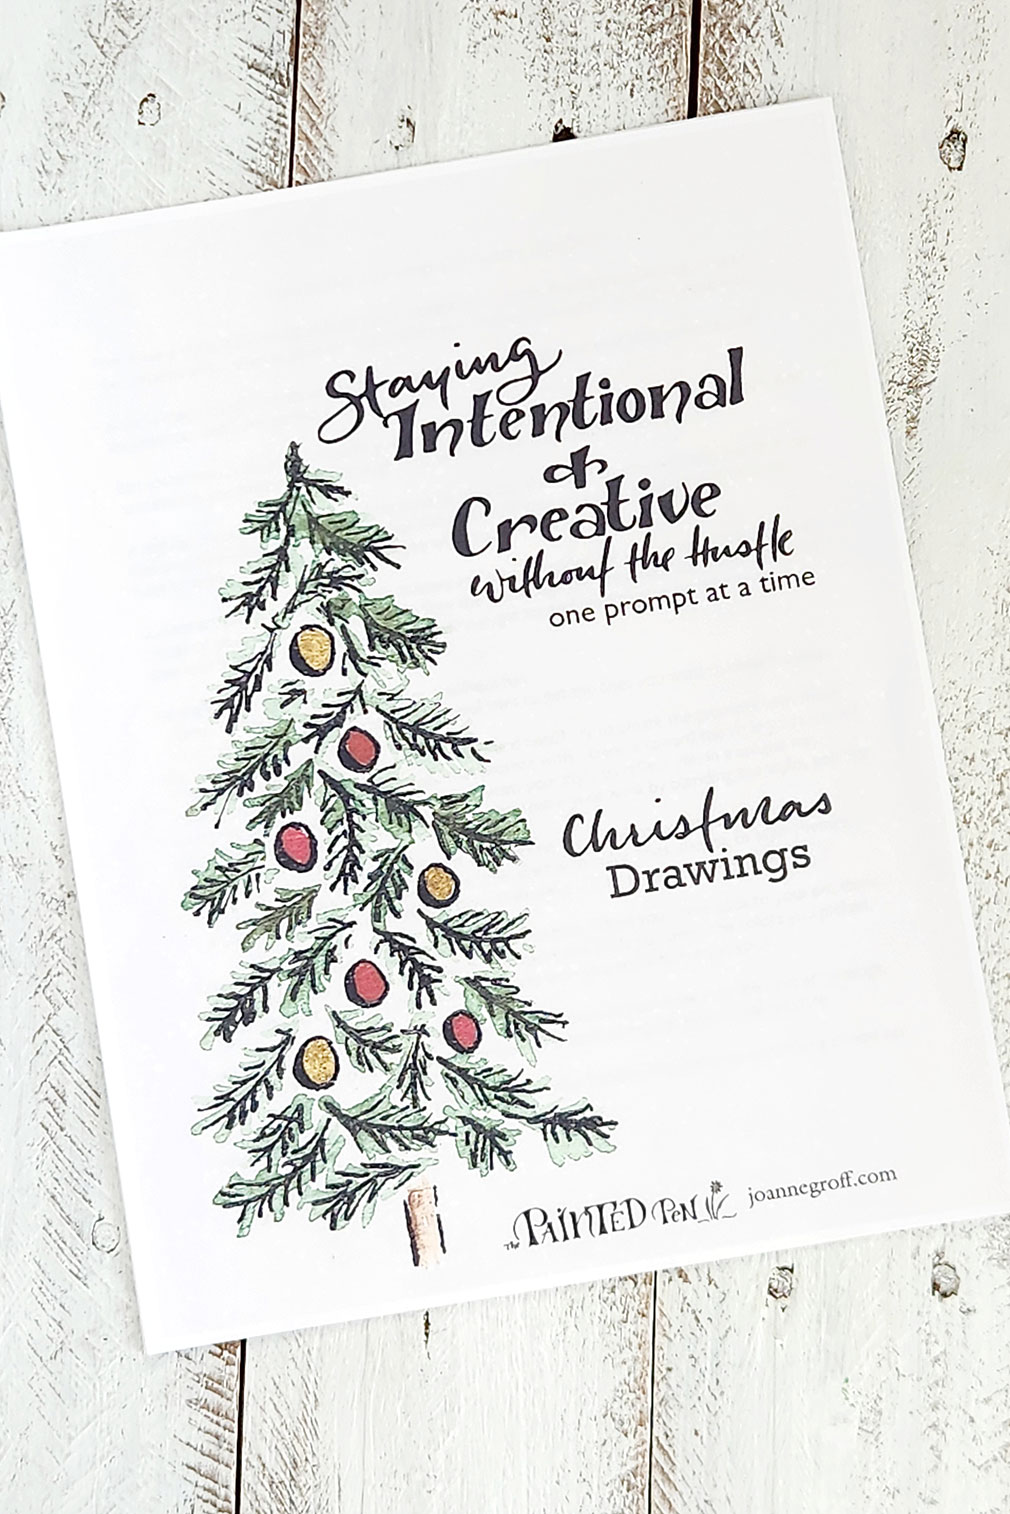 40 Christmas Drawing Ideas: Creative Inspiration for Season-saigonsouth.com.vn